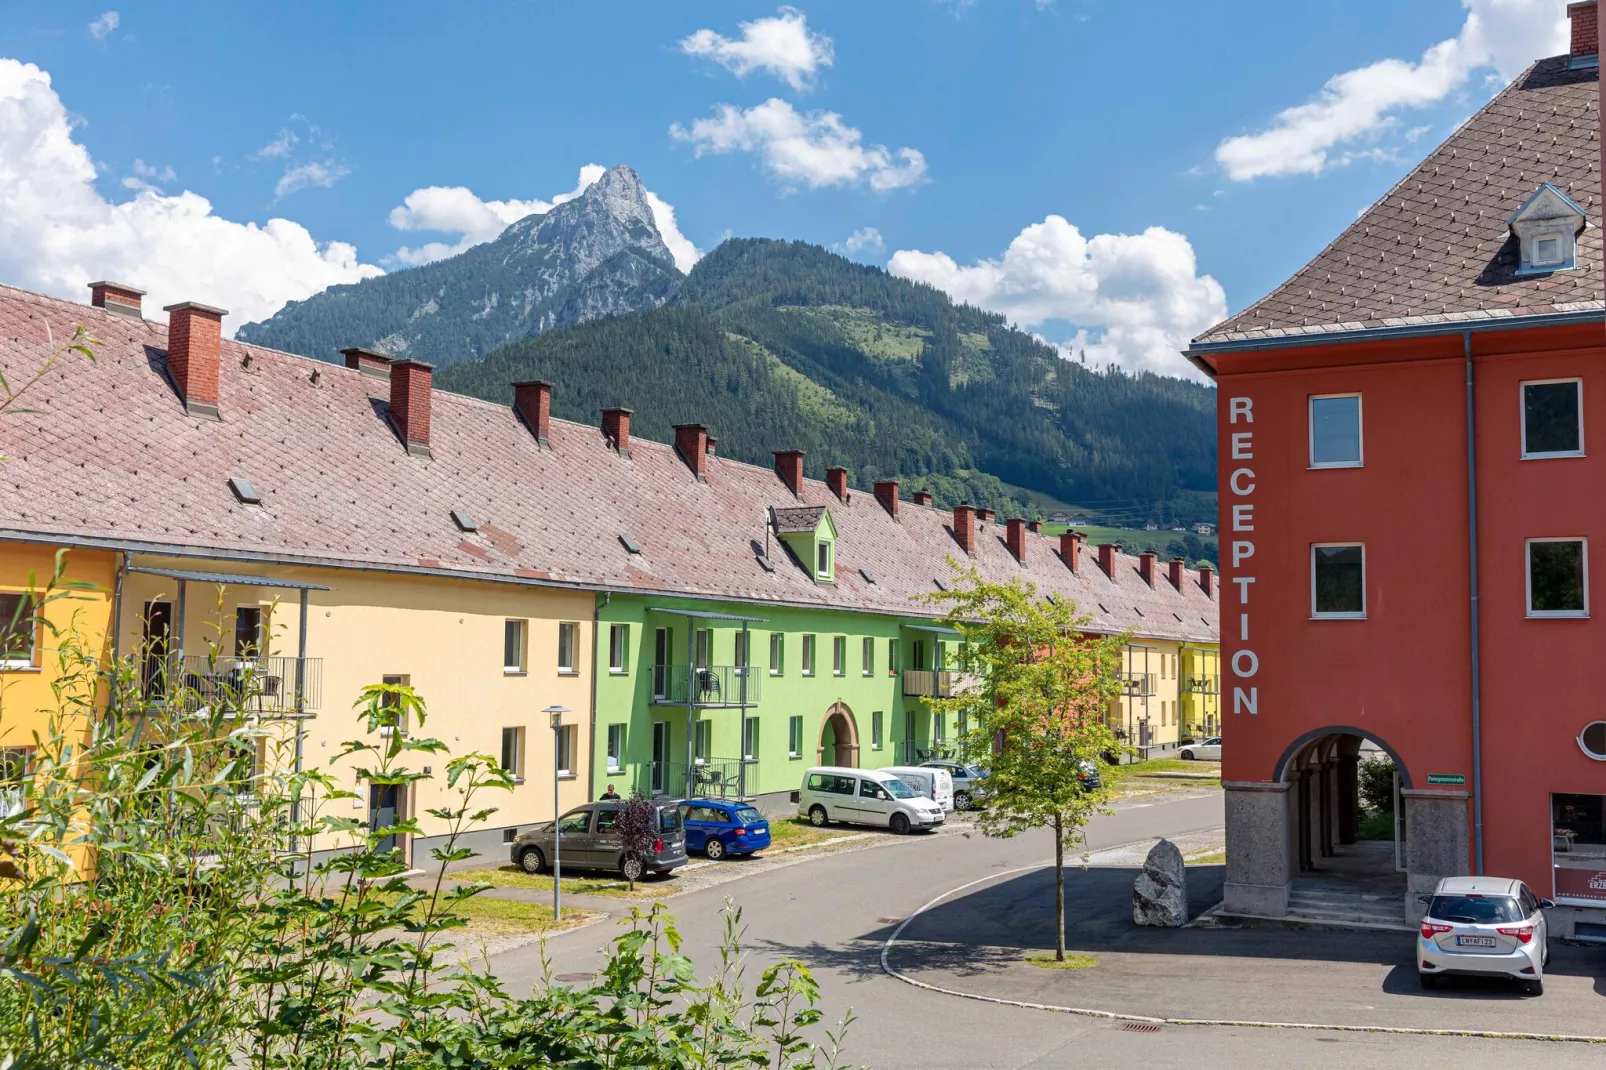 Erzberg Alpin Resort 10-Buitenkant zomer